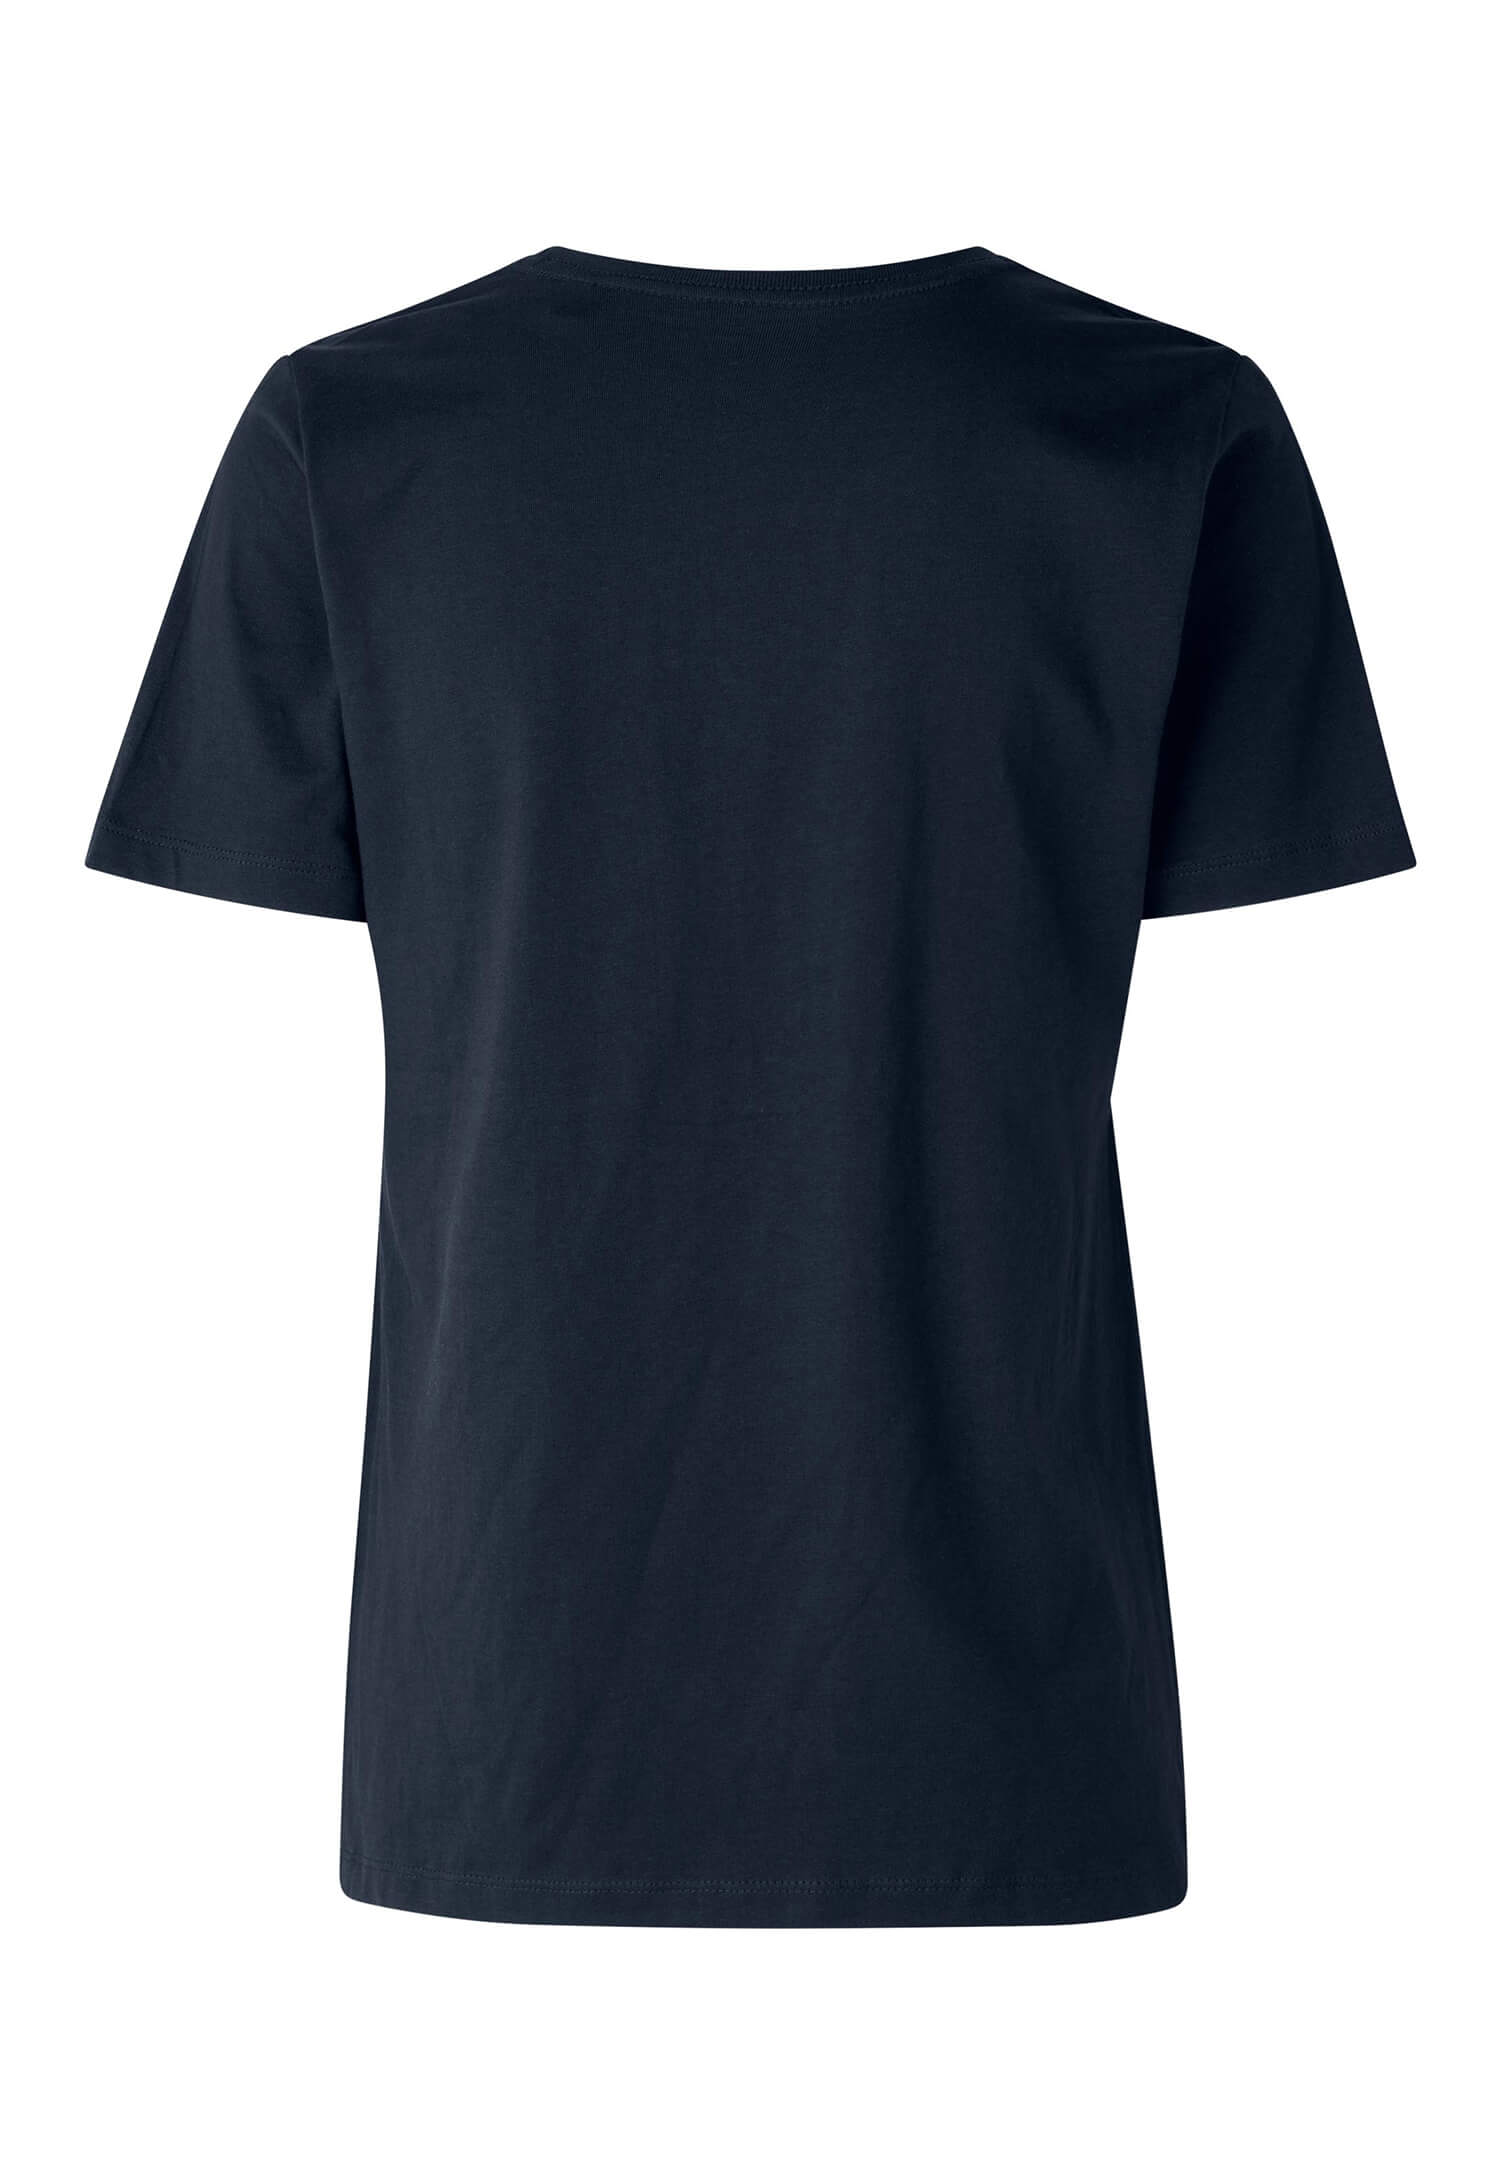 Damen Bio T-Shirt - marine - 3XL